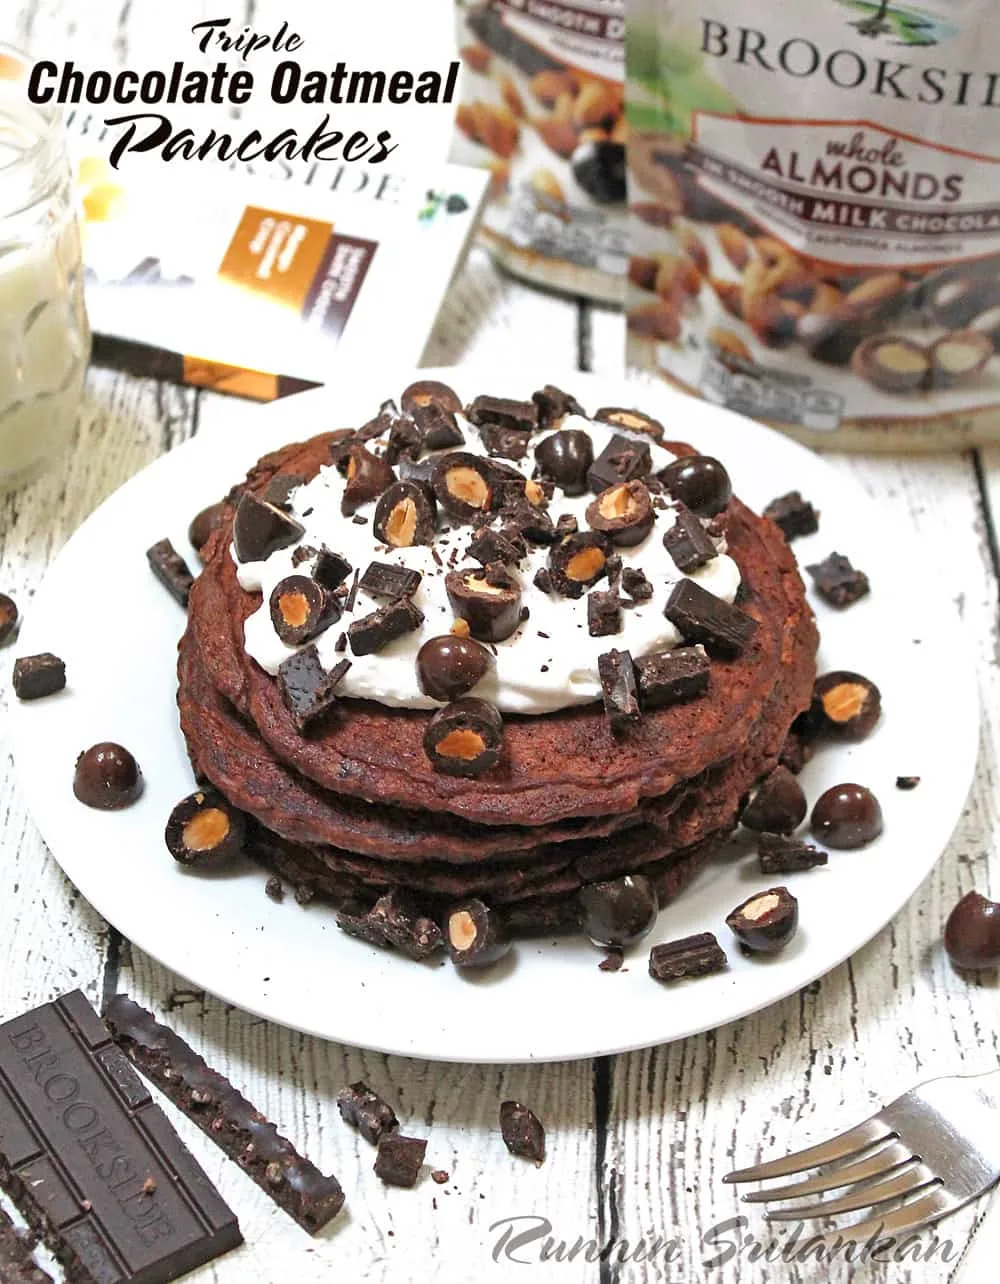 Triple Chocolate Oatmeal Pancakes #DiscoverBrookside